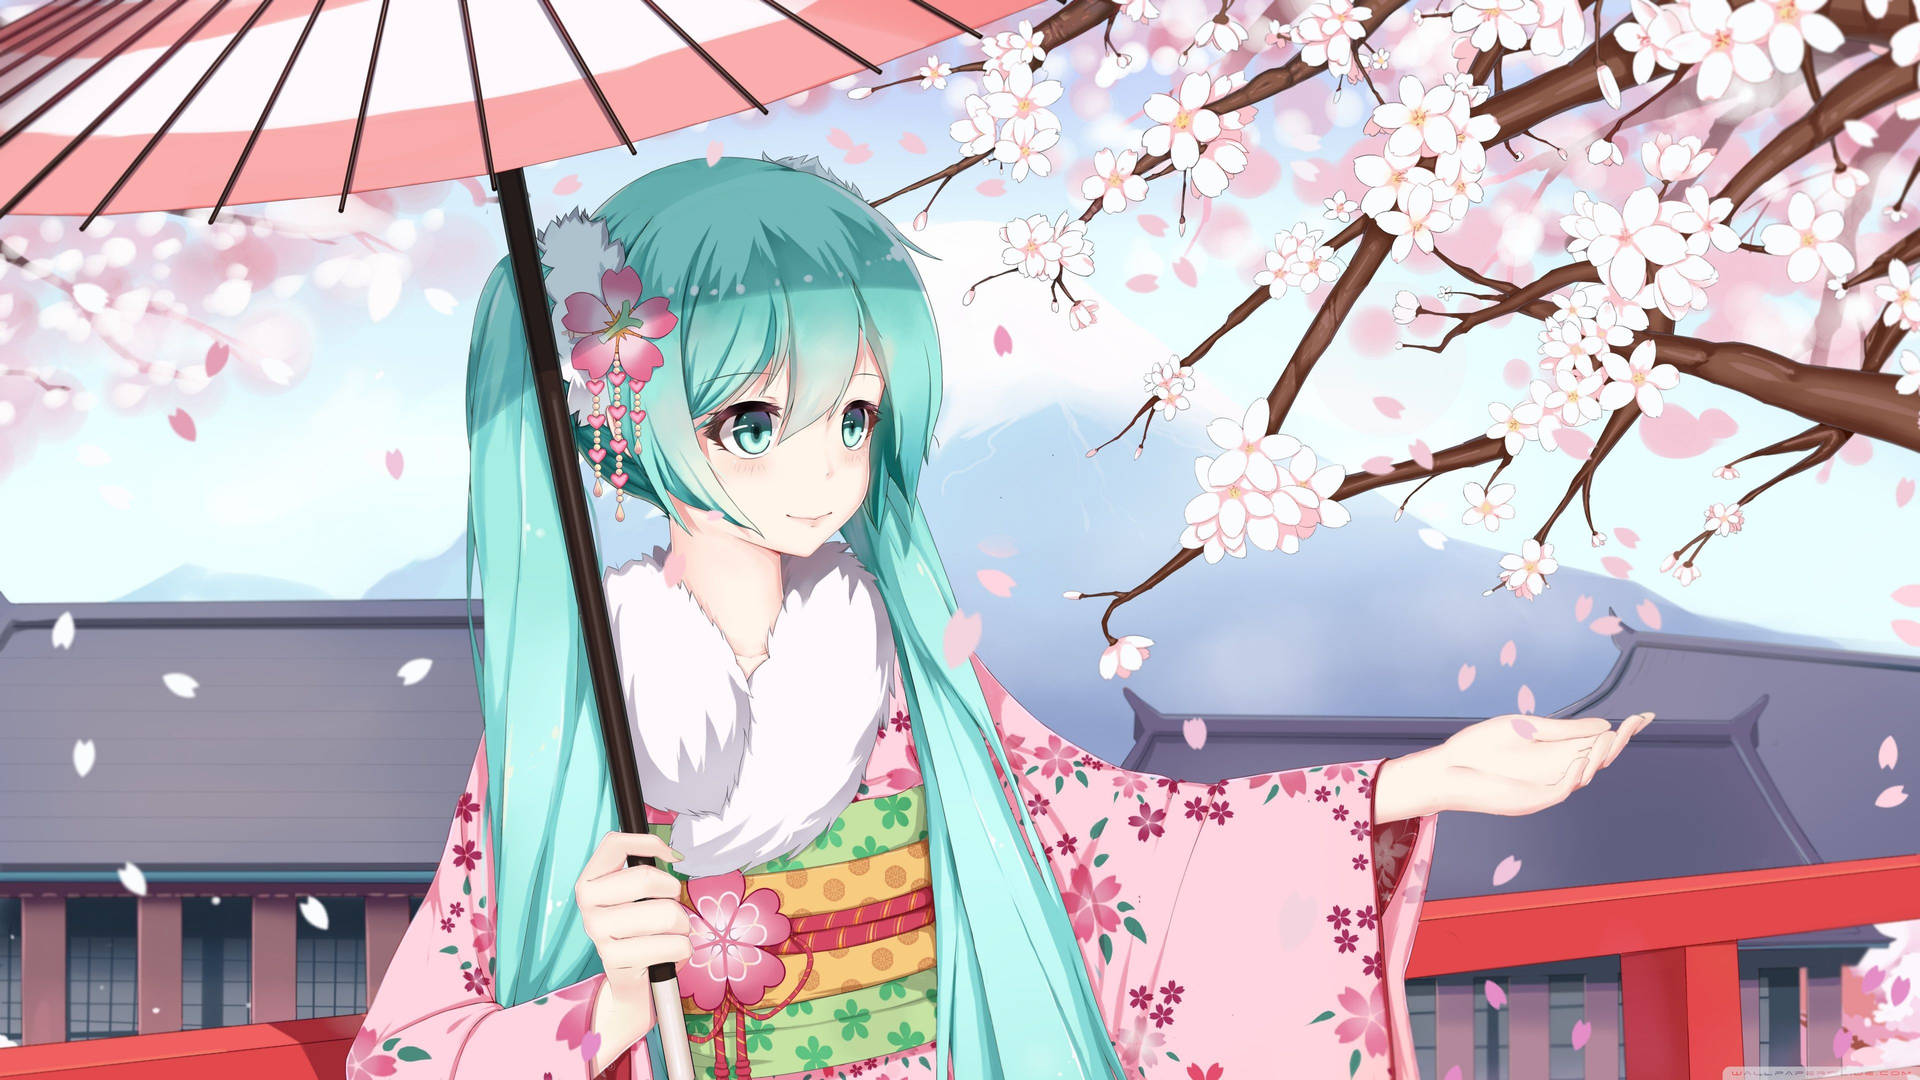 Hd Hatsune Miku Sakura Tree Background